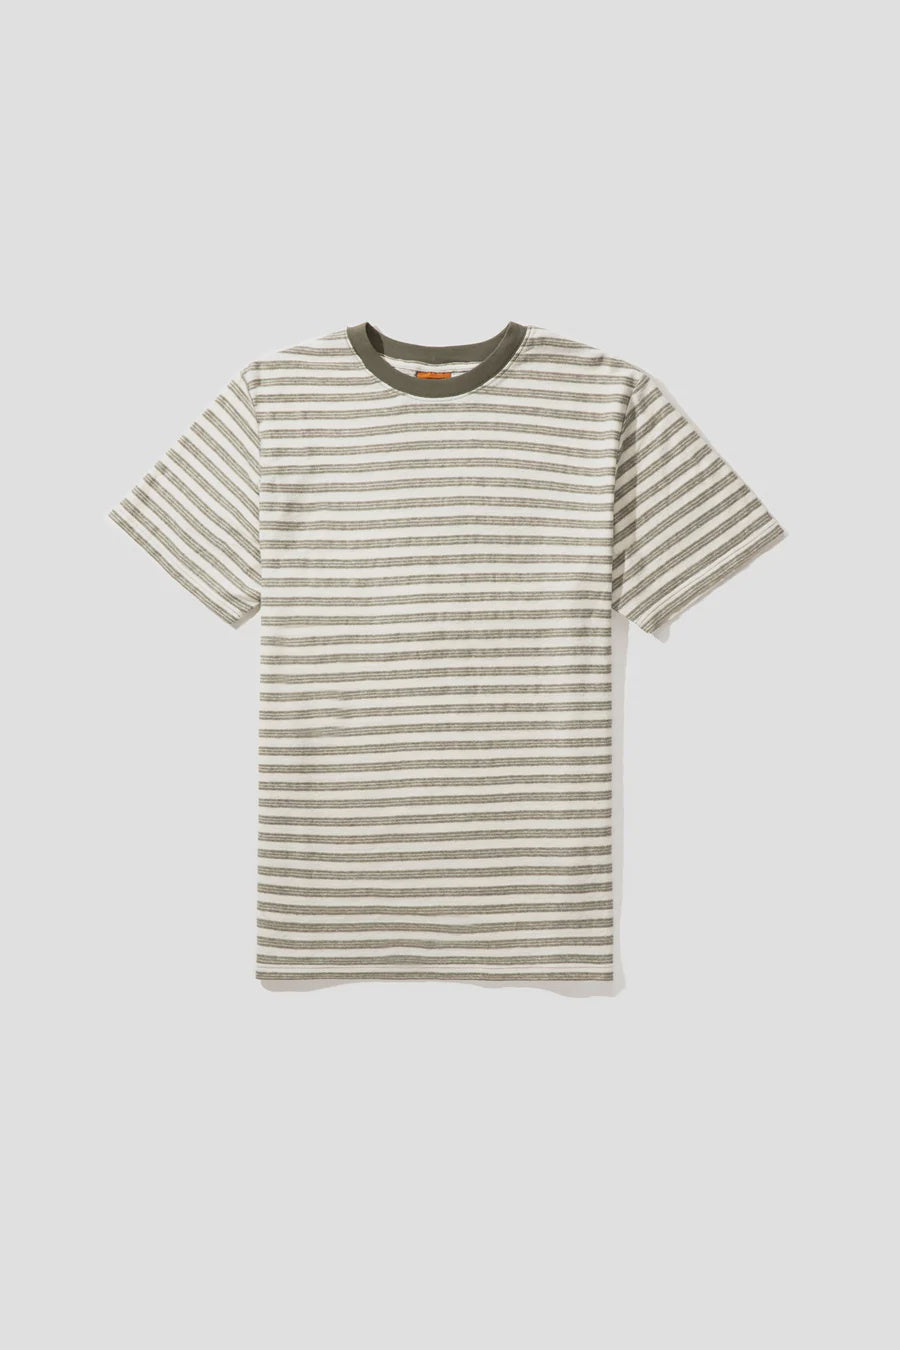 Endure Stripe Vintage Ss T-Shirt